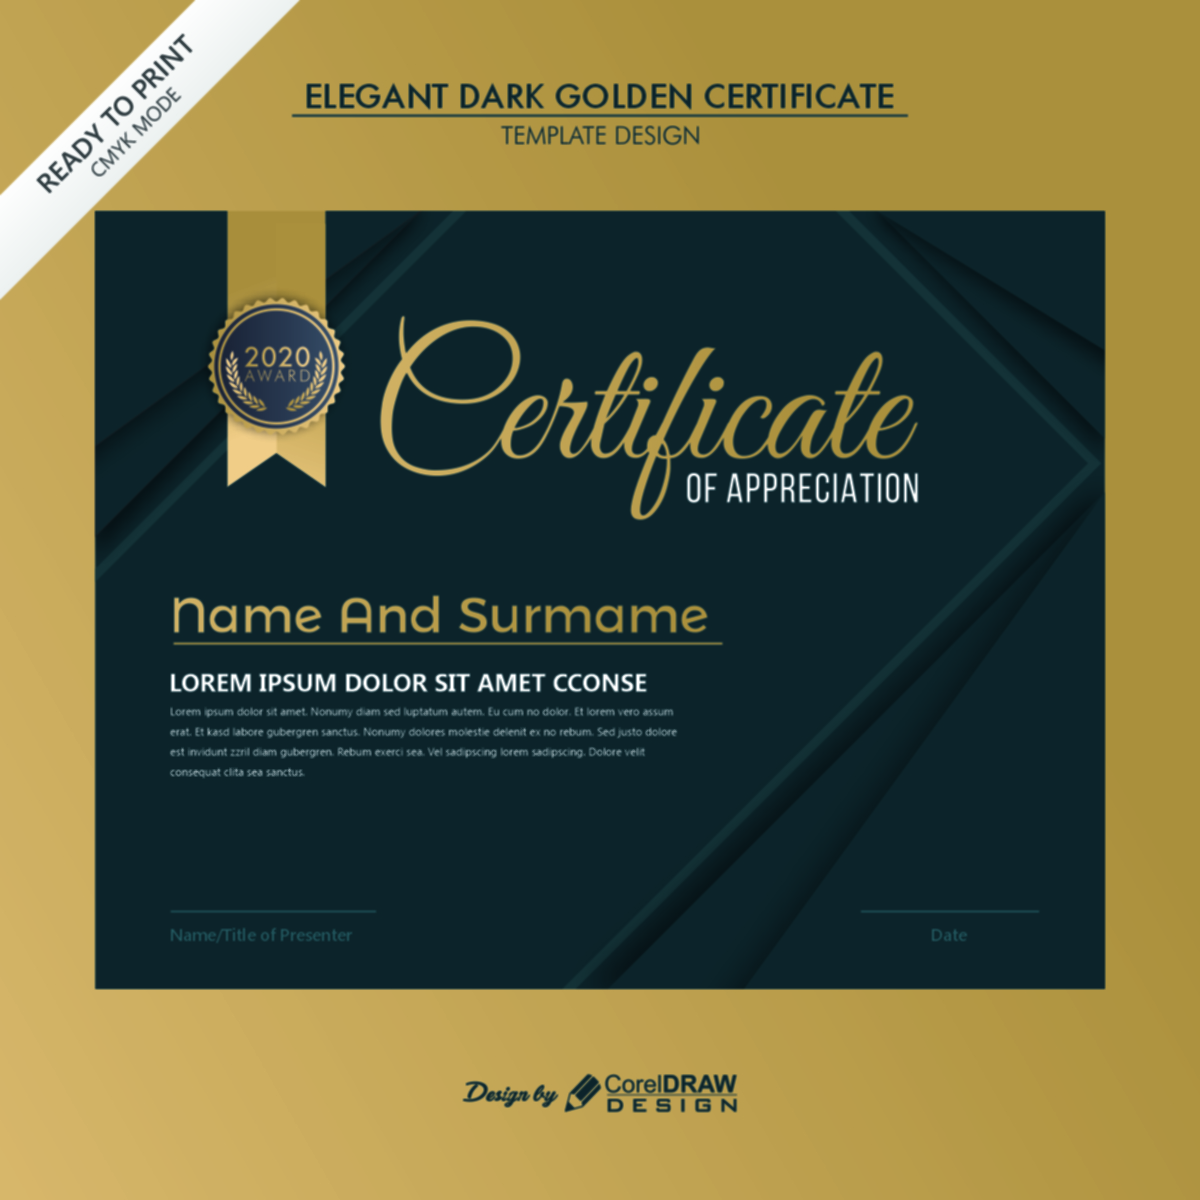 Elegant Dark Golden Certificate Template Design